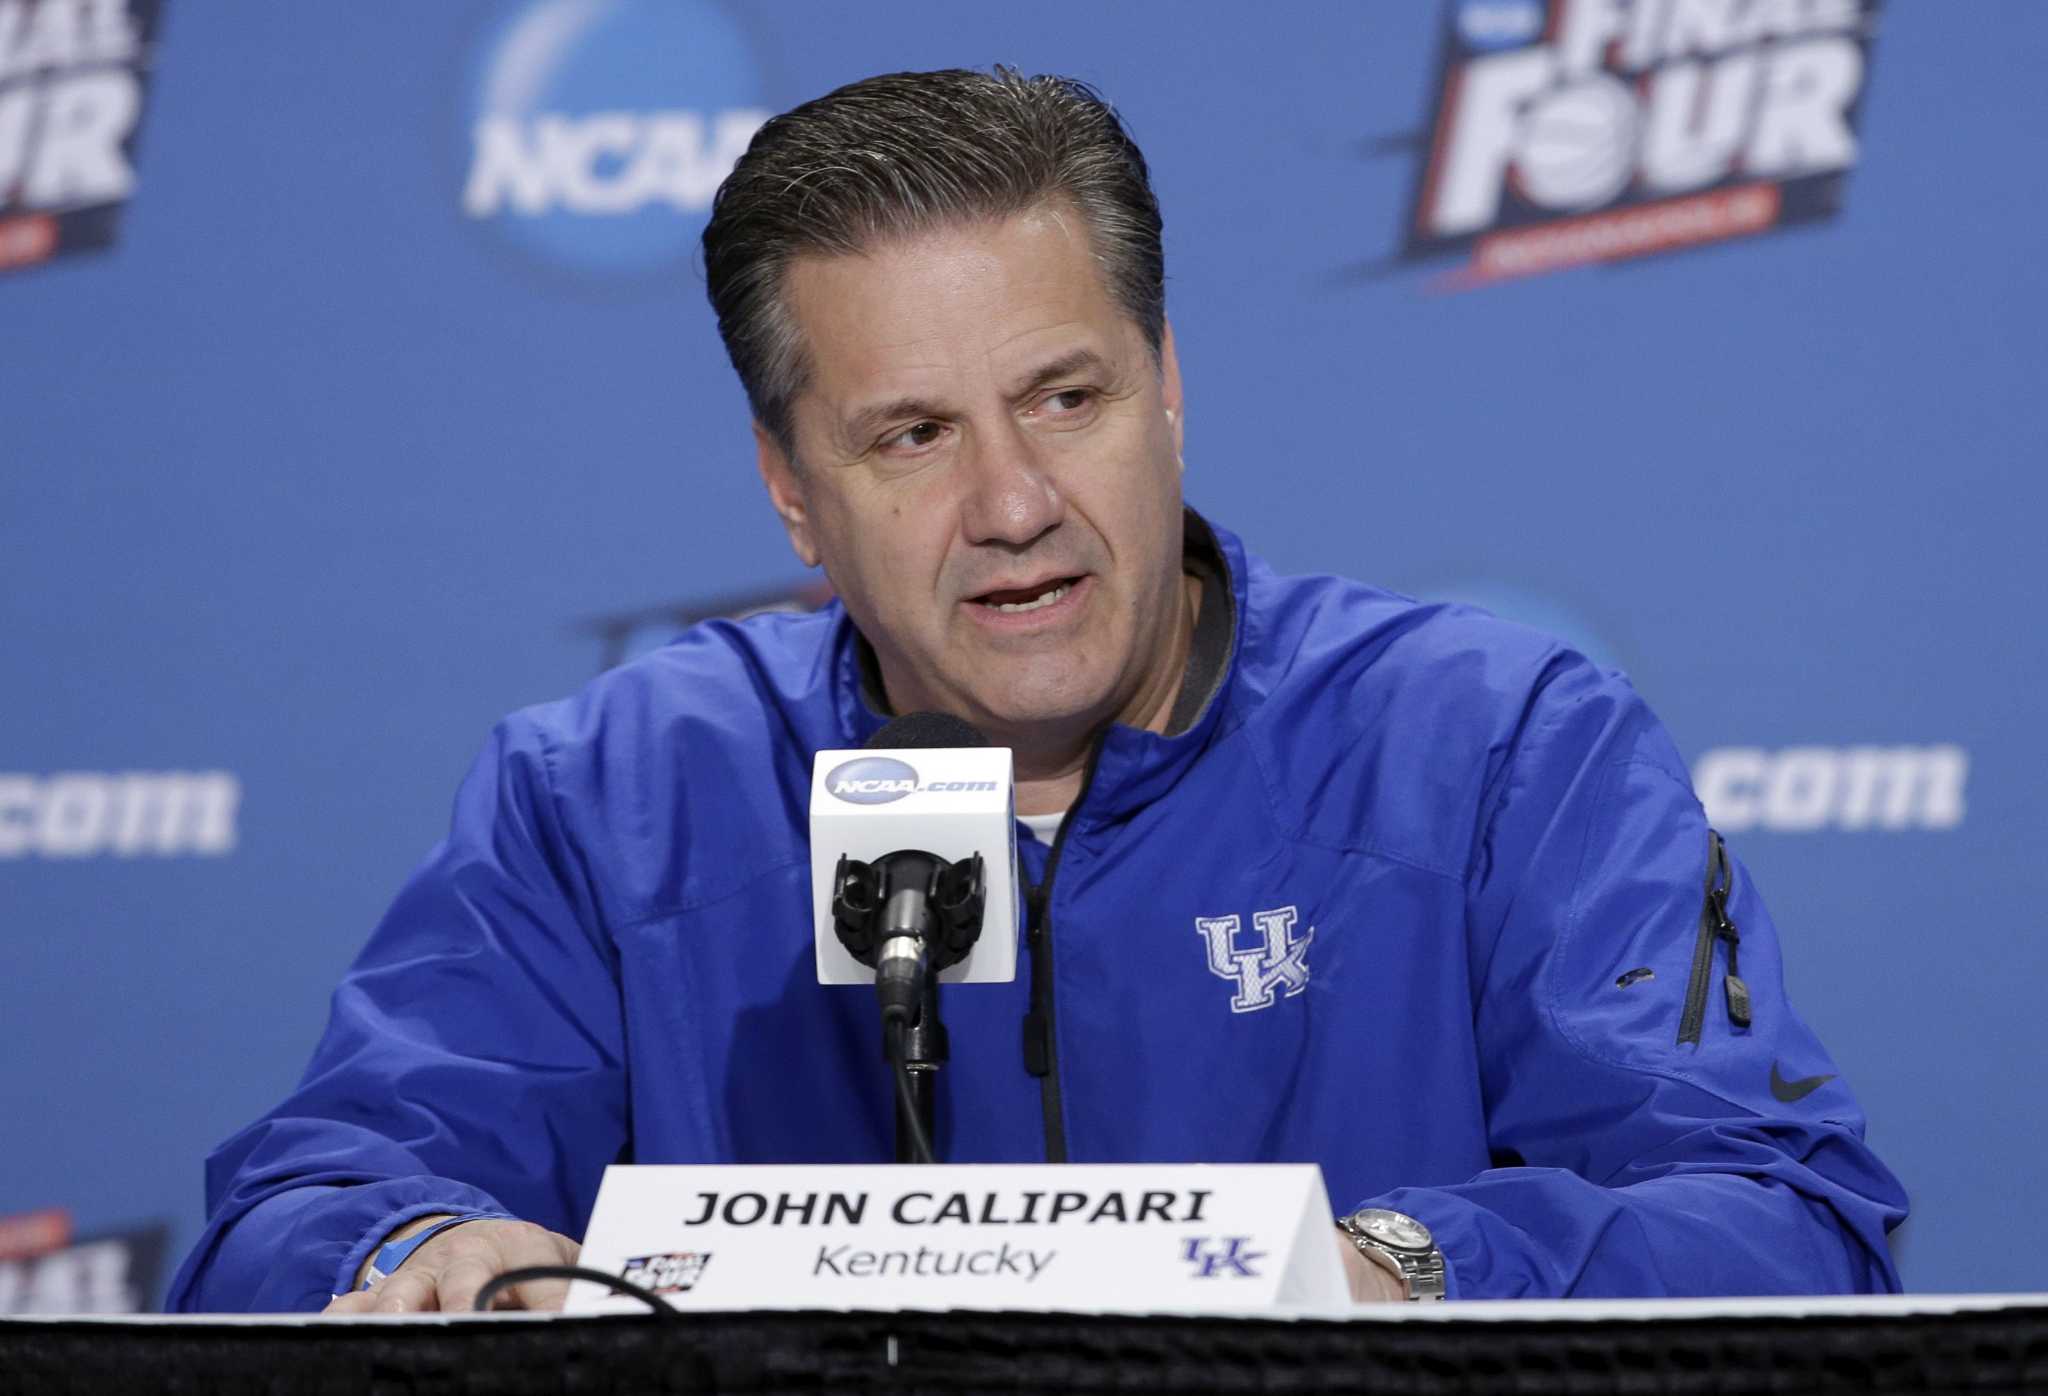 Kentucky's John Calipari named AP coach of the year